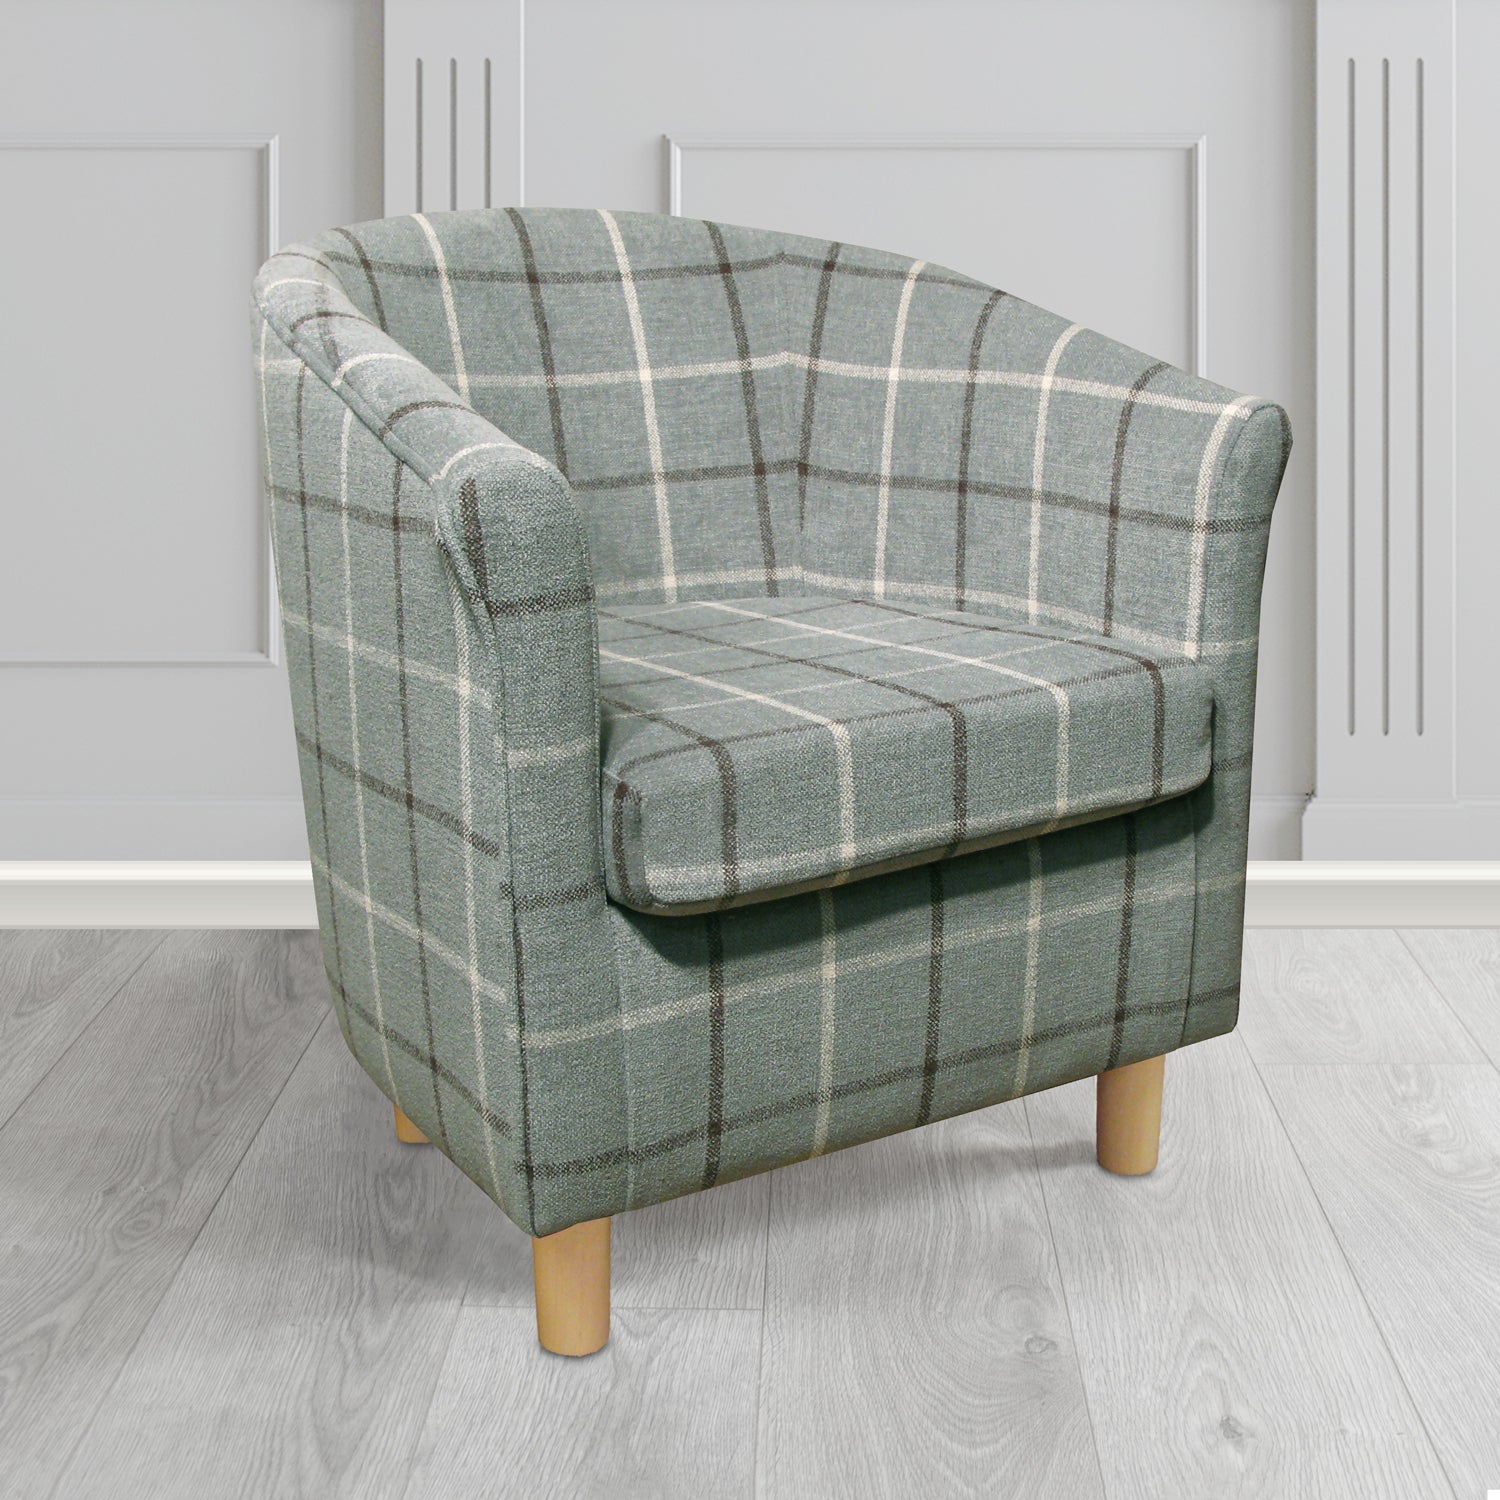 Tuscany Tub Chair in Lana Dove Grey Check Tartan LAN1261 Crib 5 Fabric